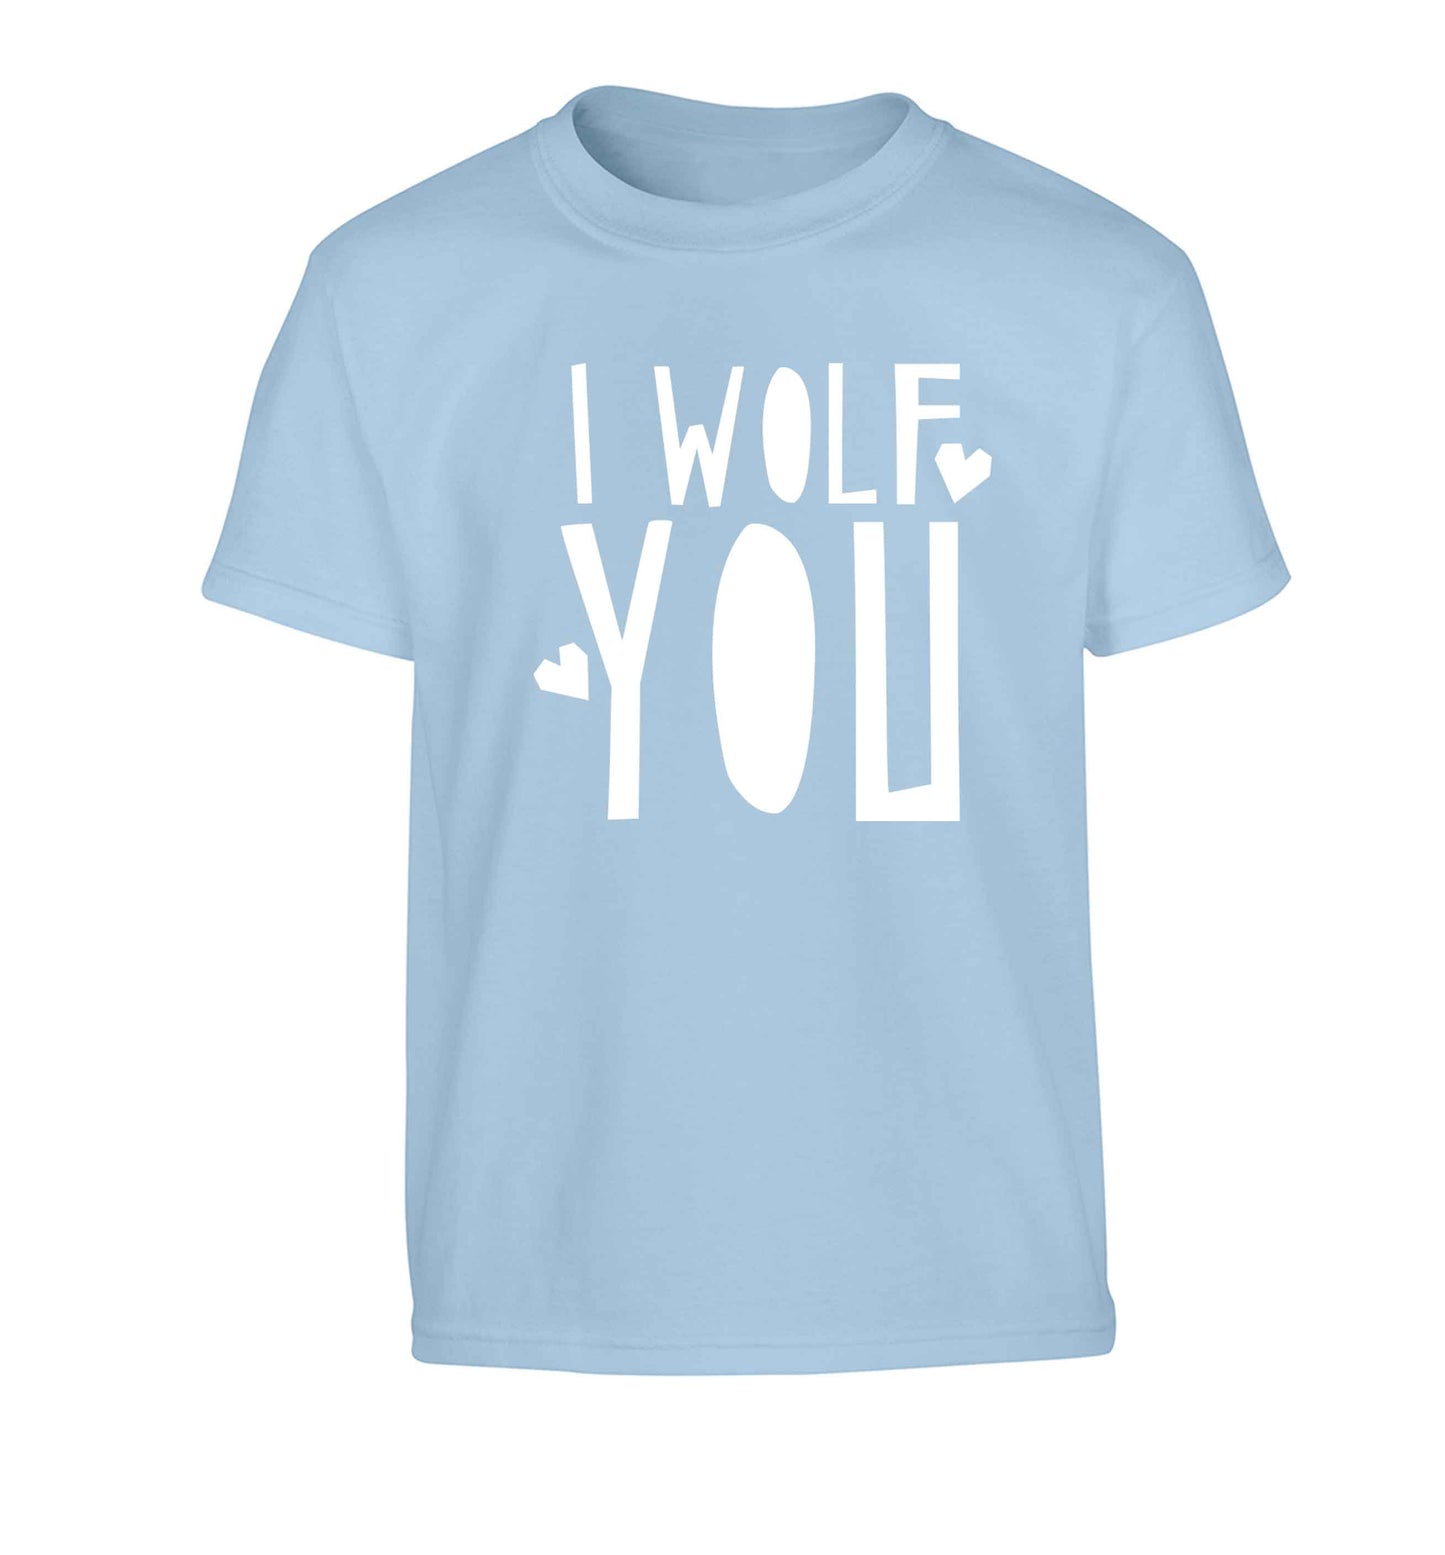 I wolf you Children's light blue Tshirt 12-13 Years